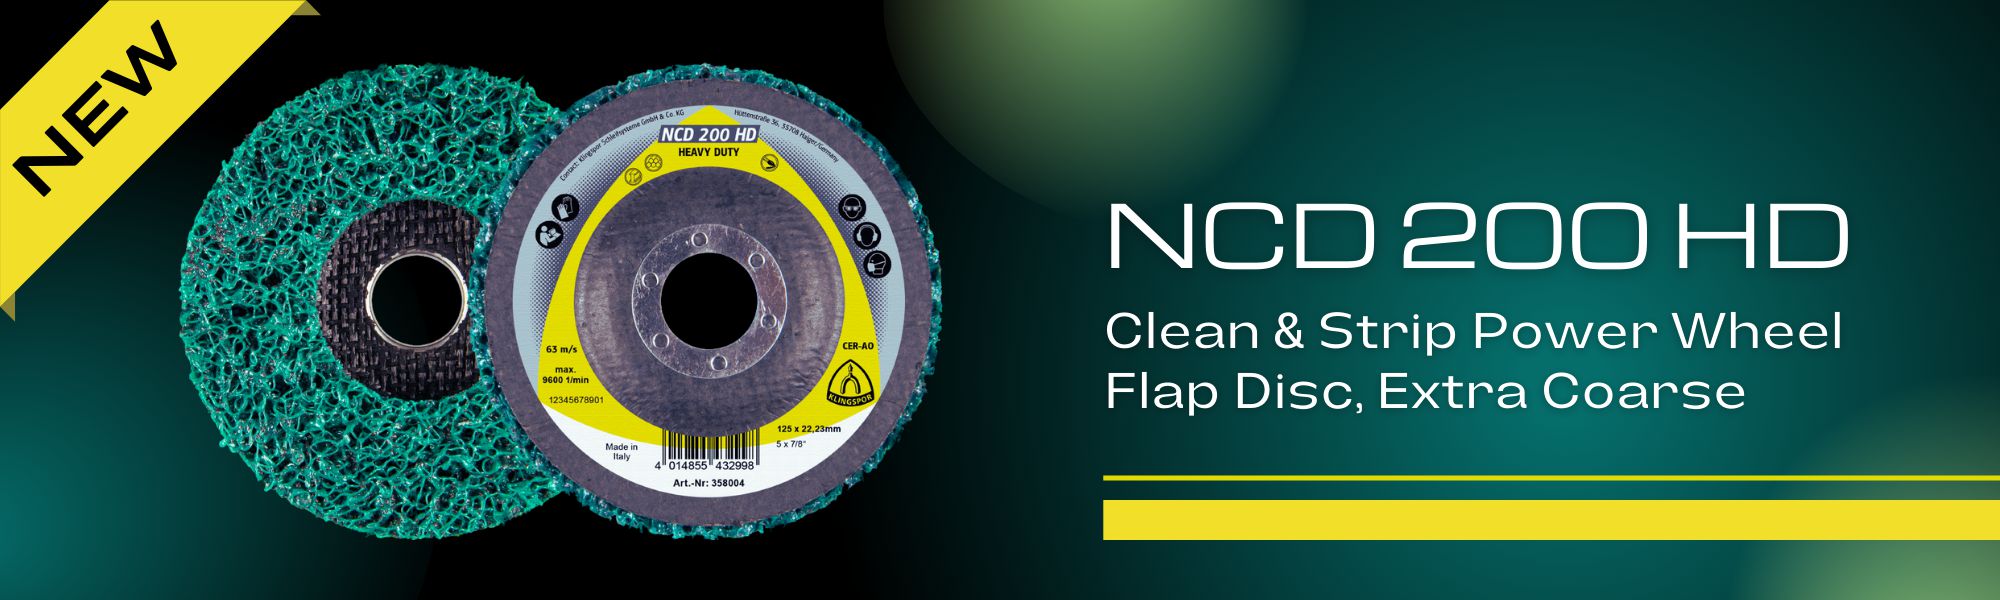 New! NCD 200 HD flap disc!